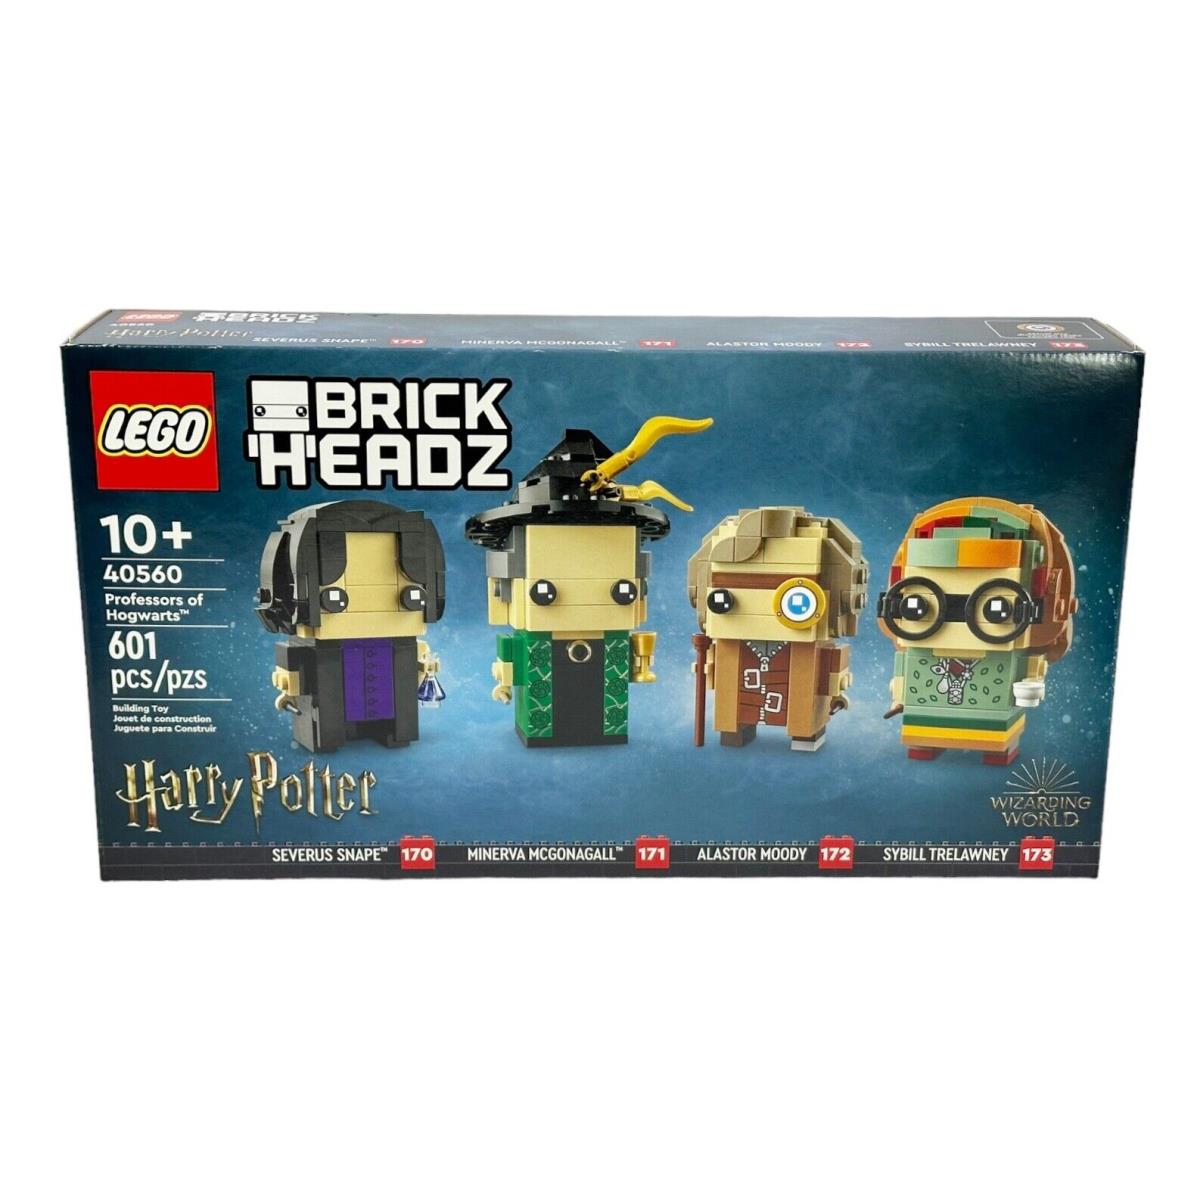 Lego Brickheadz: Harry Potter Set 40560 Professors of Hogwarts